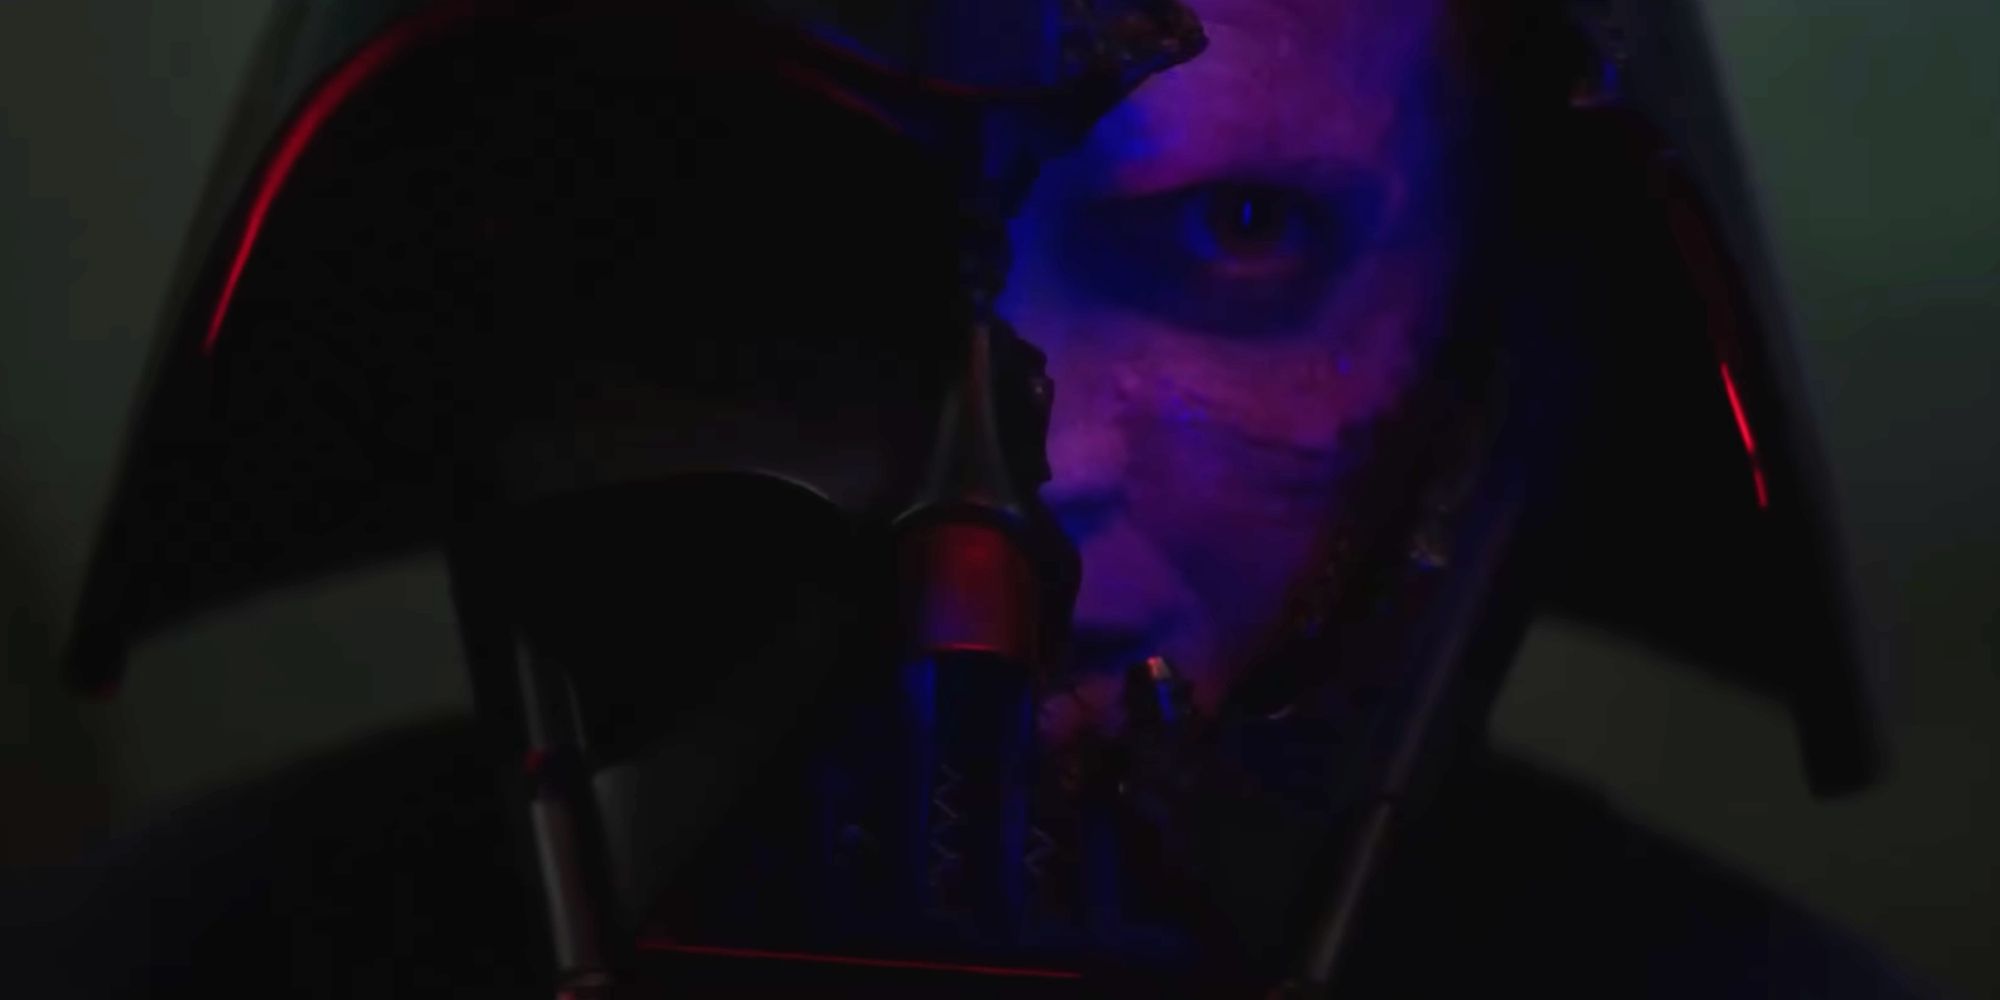 Darth Vader with a broken mask speaking to Obi-Wan in the Obi-Wan Kenobi series